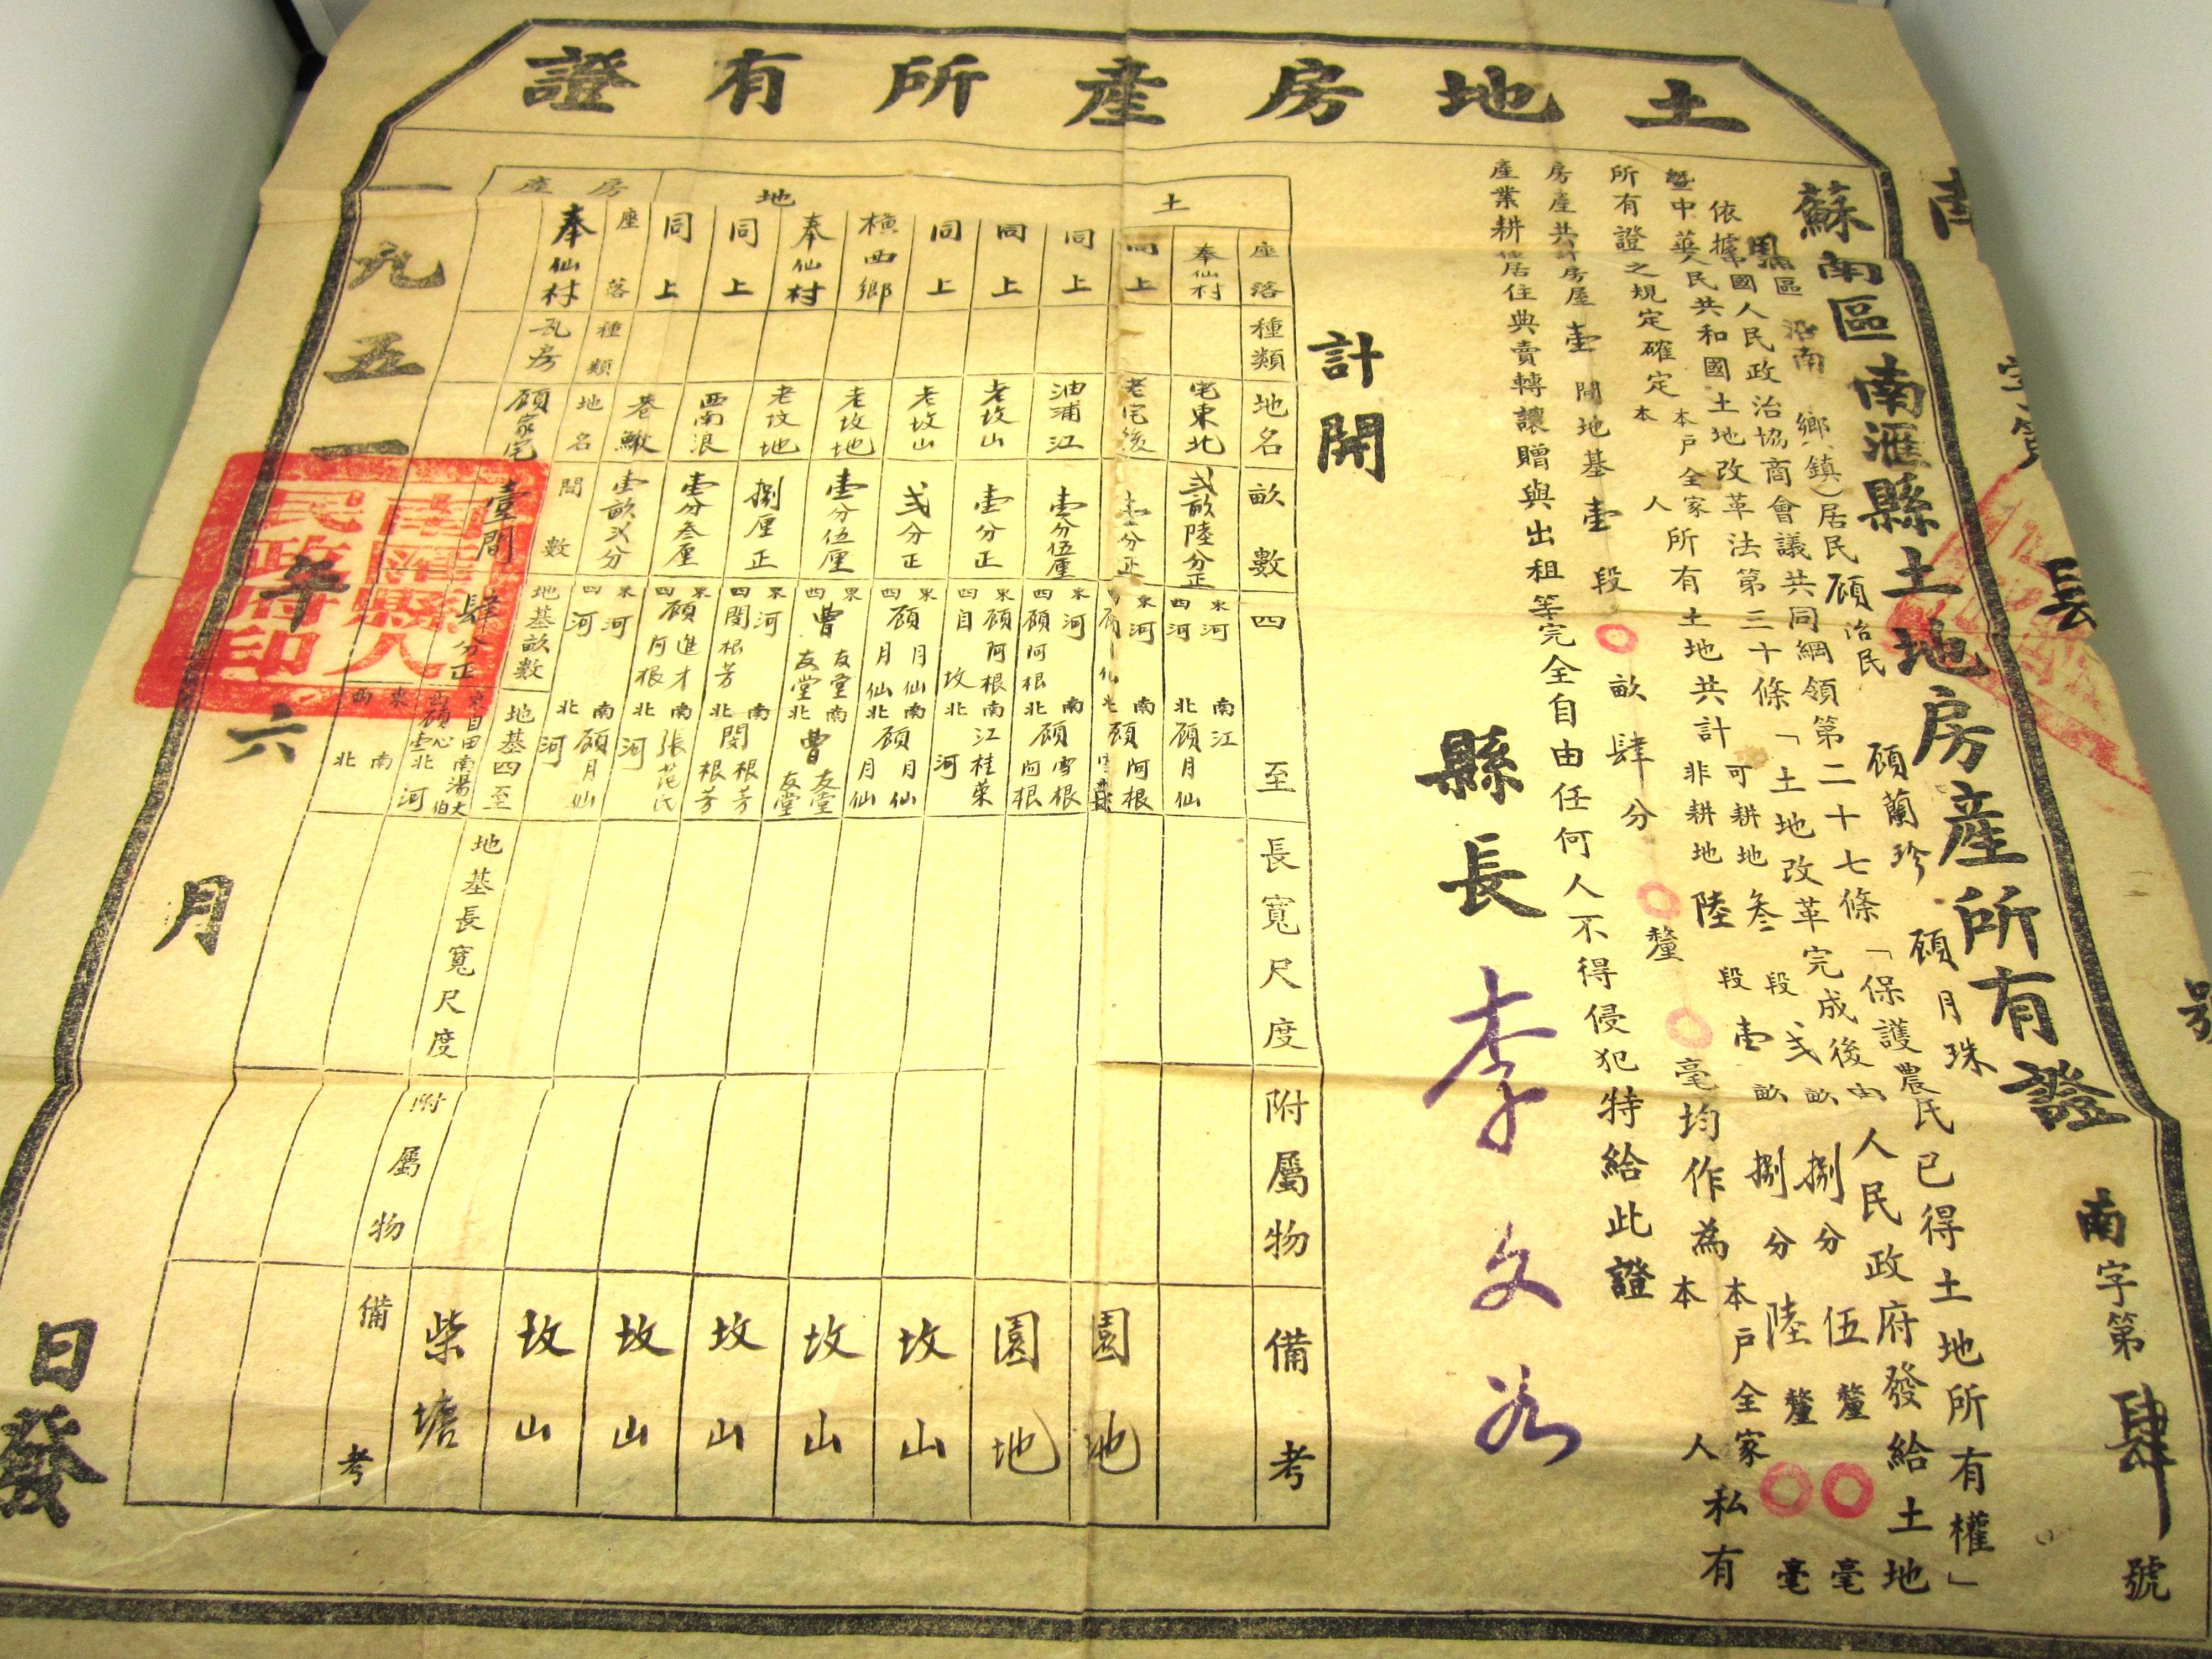 D4035, Land Deed of Shanghai Nanhui District, China 1951